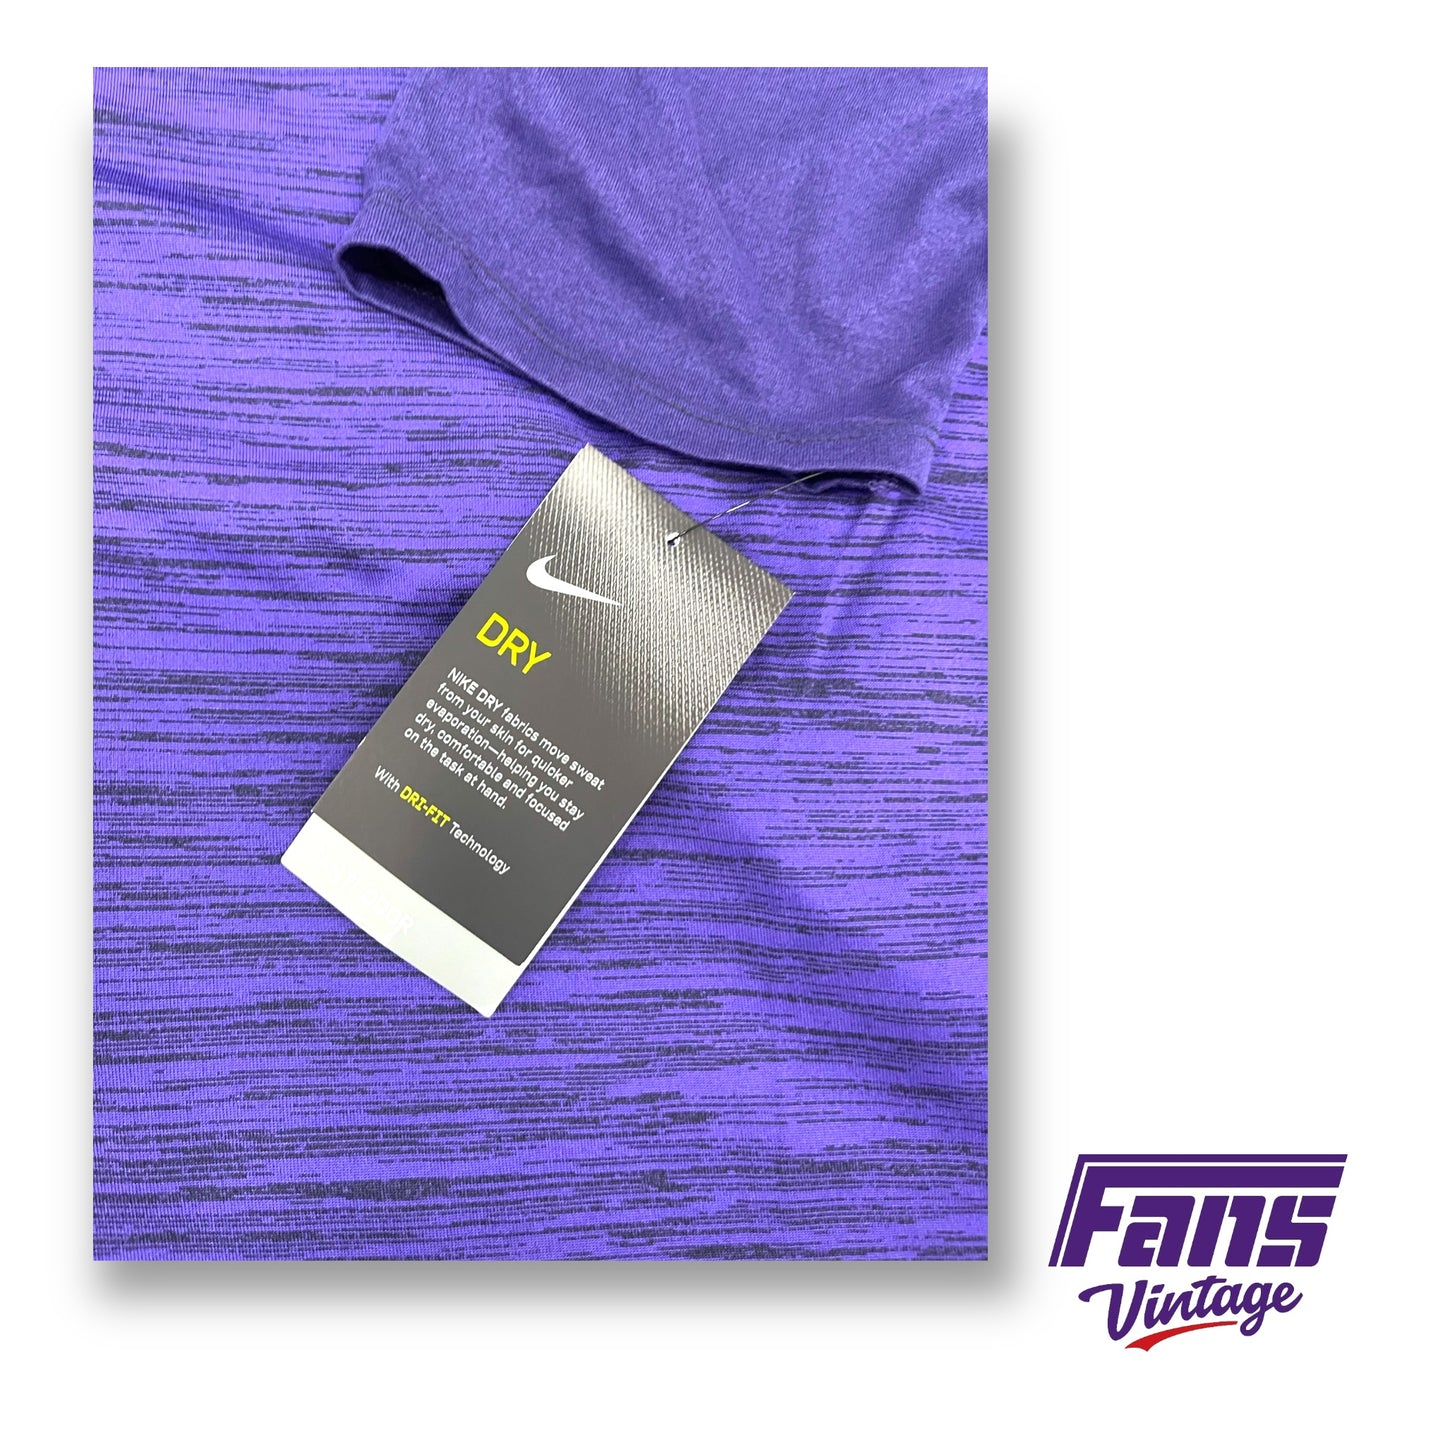 Limited Edition TCU Baseball Team Issued Purple Heather Raglan Shirt with Vintage Logos!